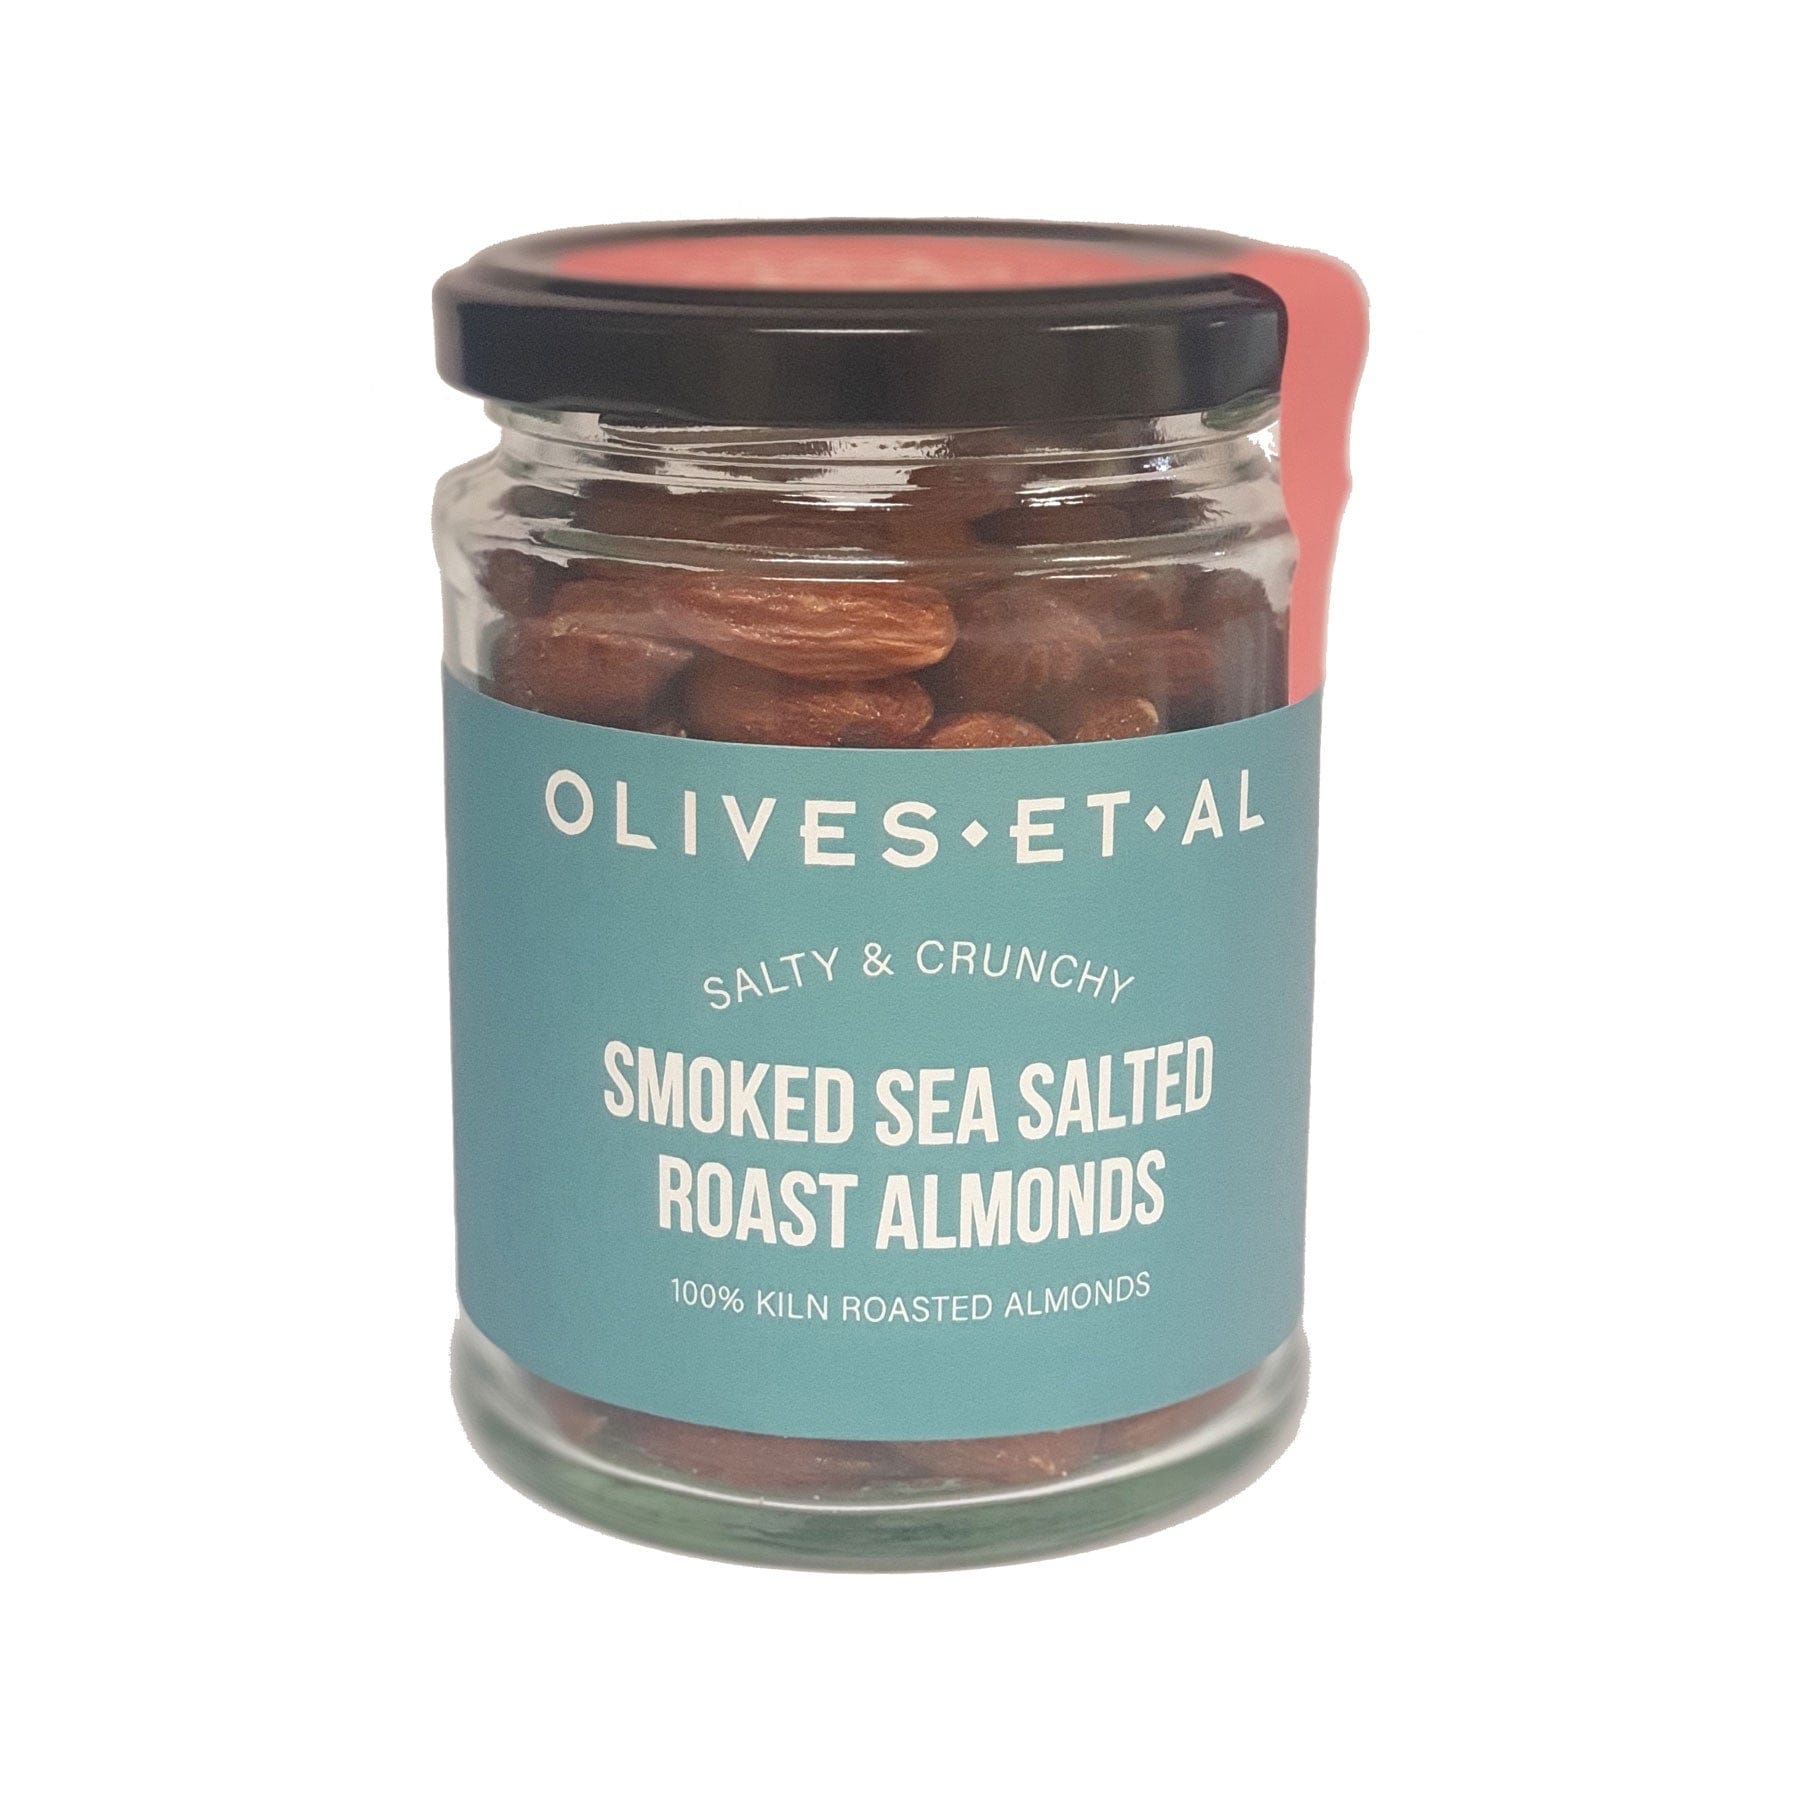 Smoked sea salt roast almonds 150g